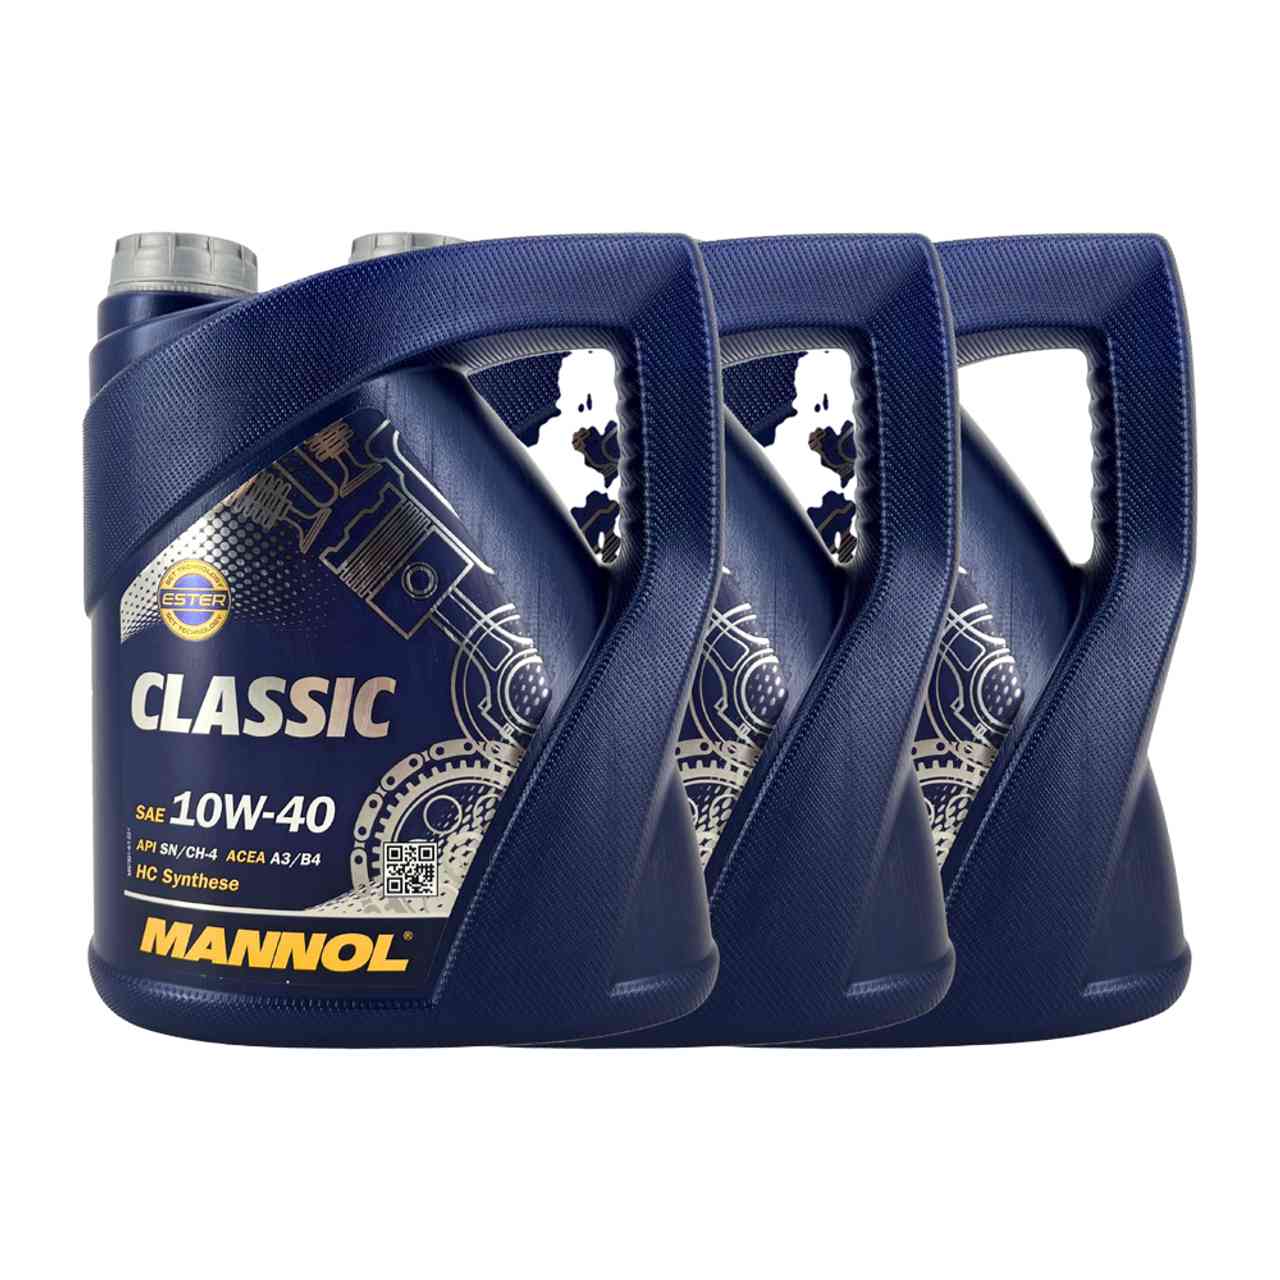 Mannol Classic 10W-40 3x4 Liter